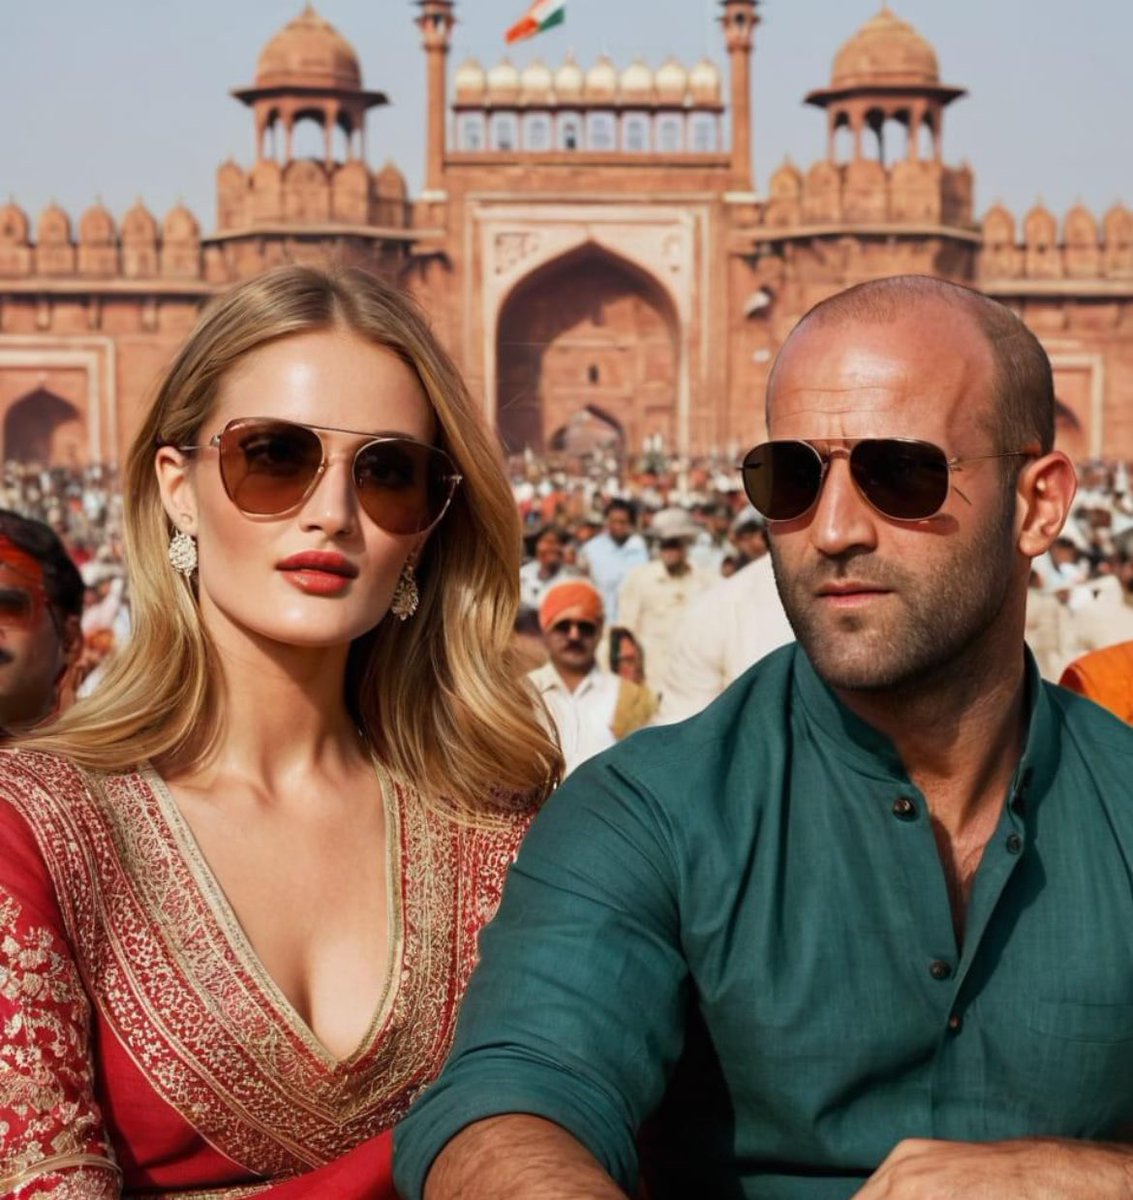 Hollywood actor #JasonStatham with his girlfriend #RosieHuntingtonWhiteley at #LalQuila, #NewDelhi, #India 🇮🇳